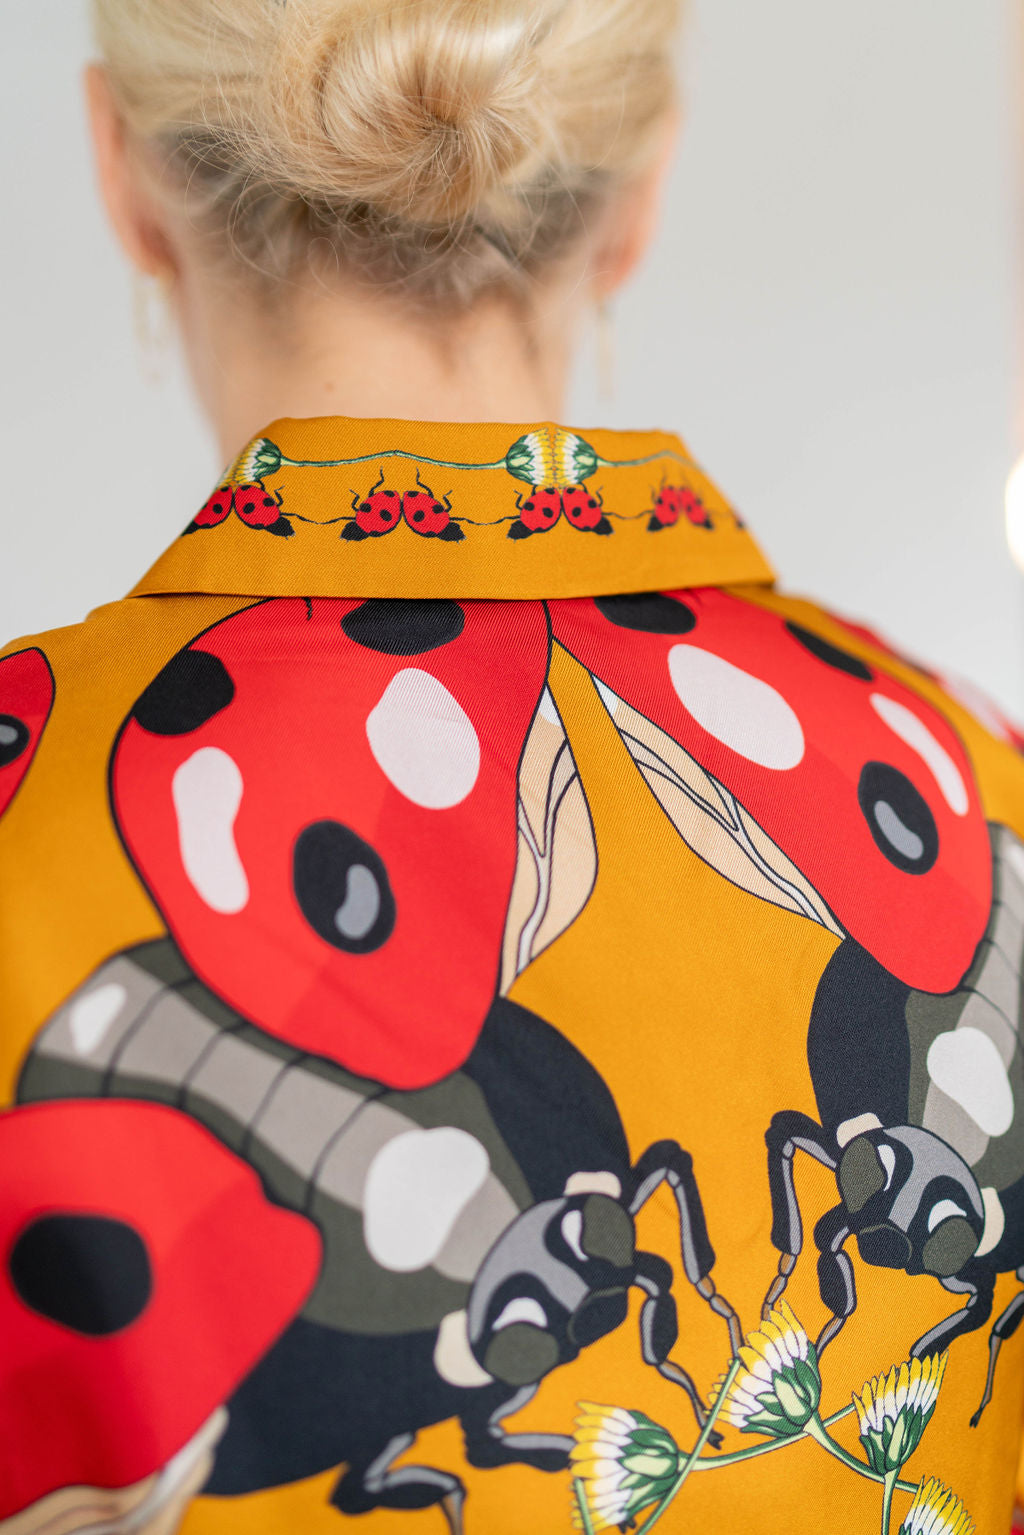 Franco Ferrari Ladybug Dress